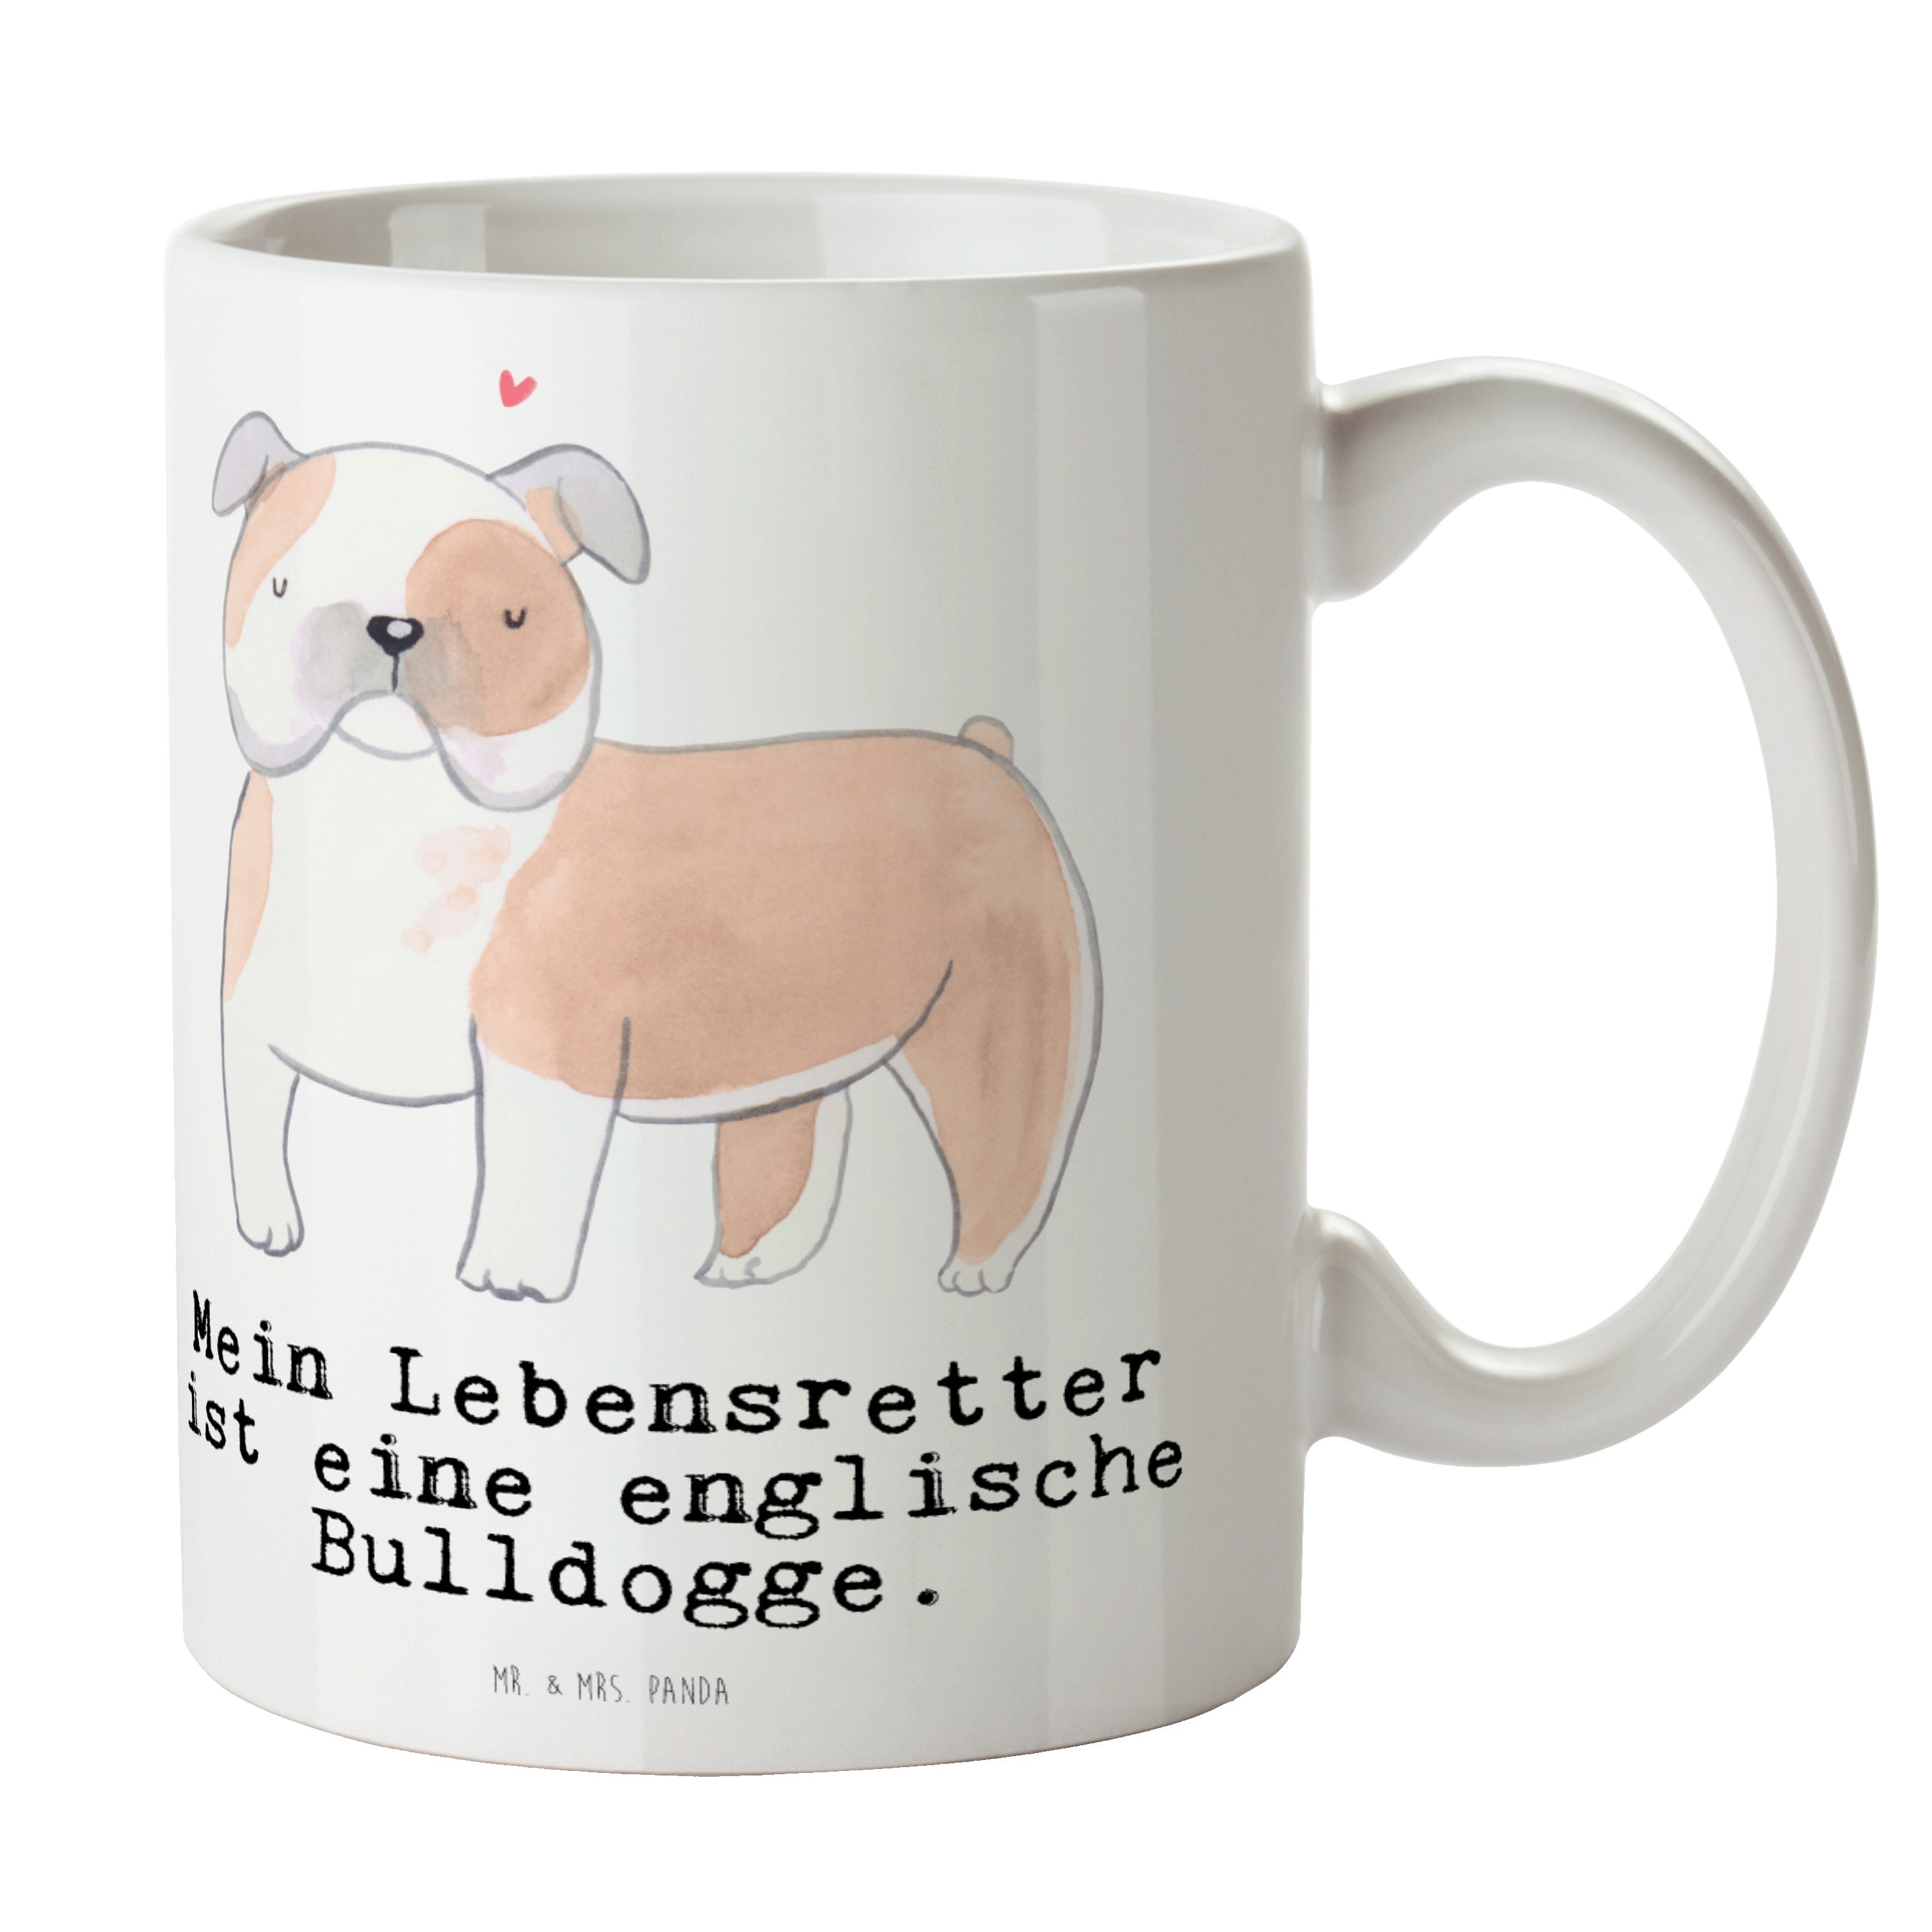 Mr. & Mrs. Panda Tasse Englische Bulldogge Lebensretter - Weiß - Geschenk, Büro Tasse, Teebe, Keramik